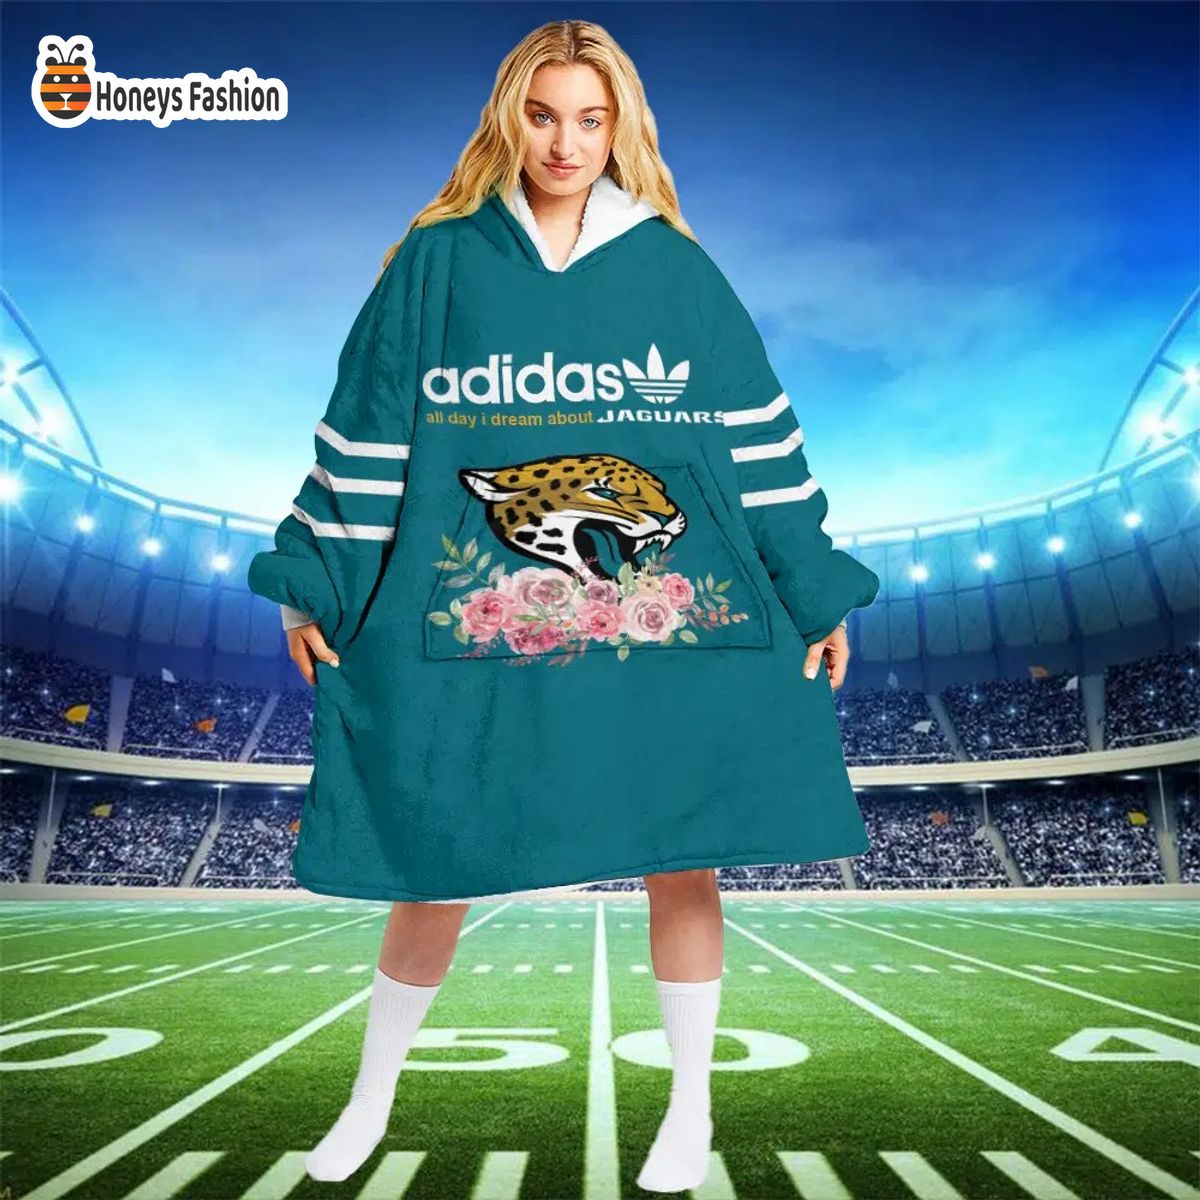 Jacksonville Jaguars NFL Adidas all day i dream about Jaguars blanket hoodie